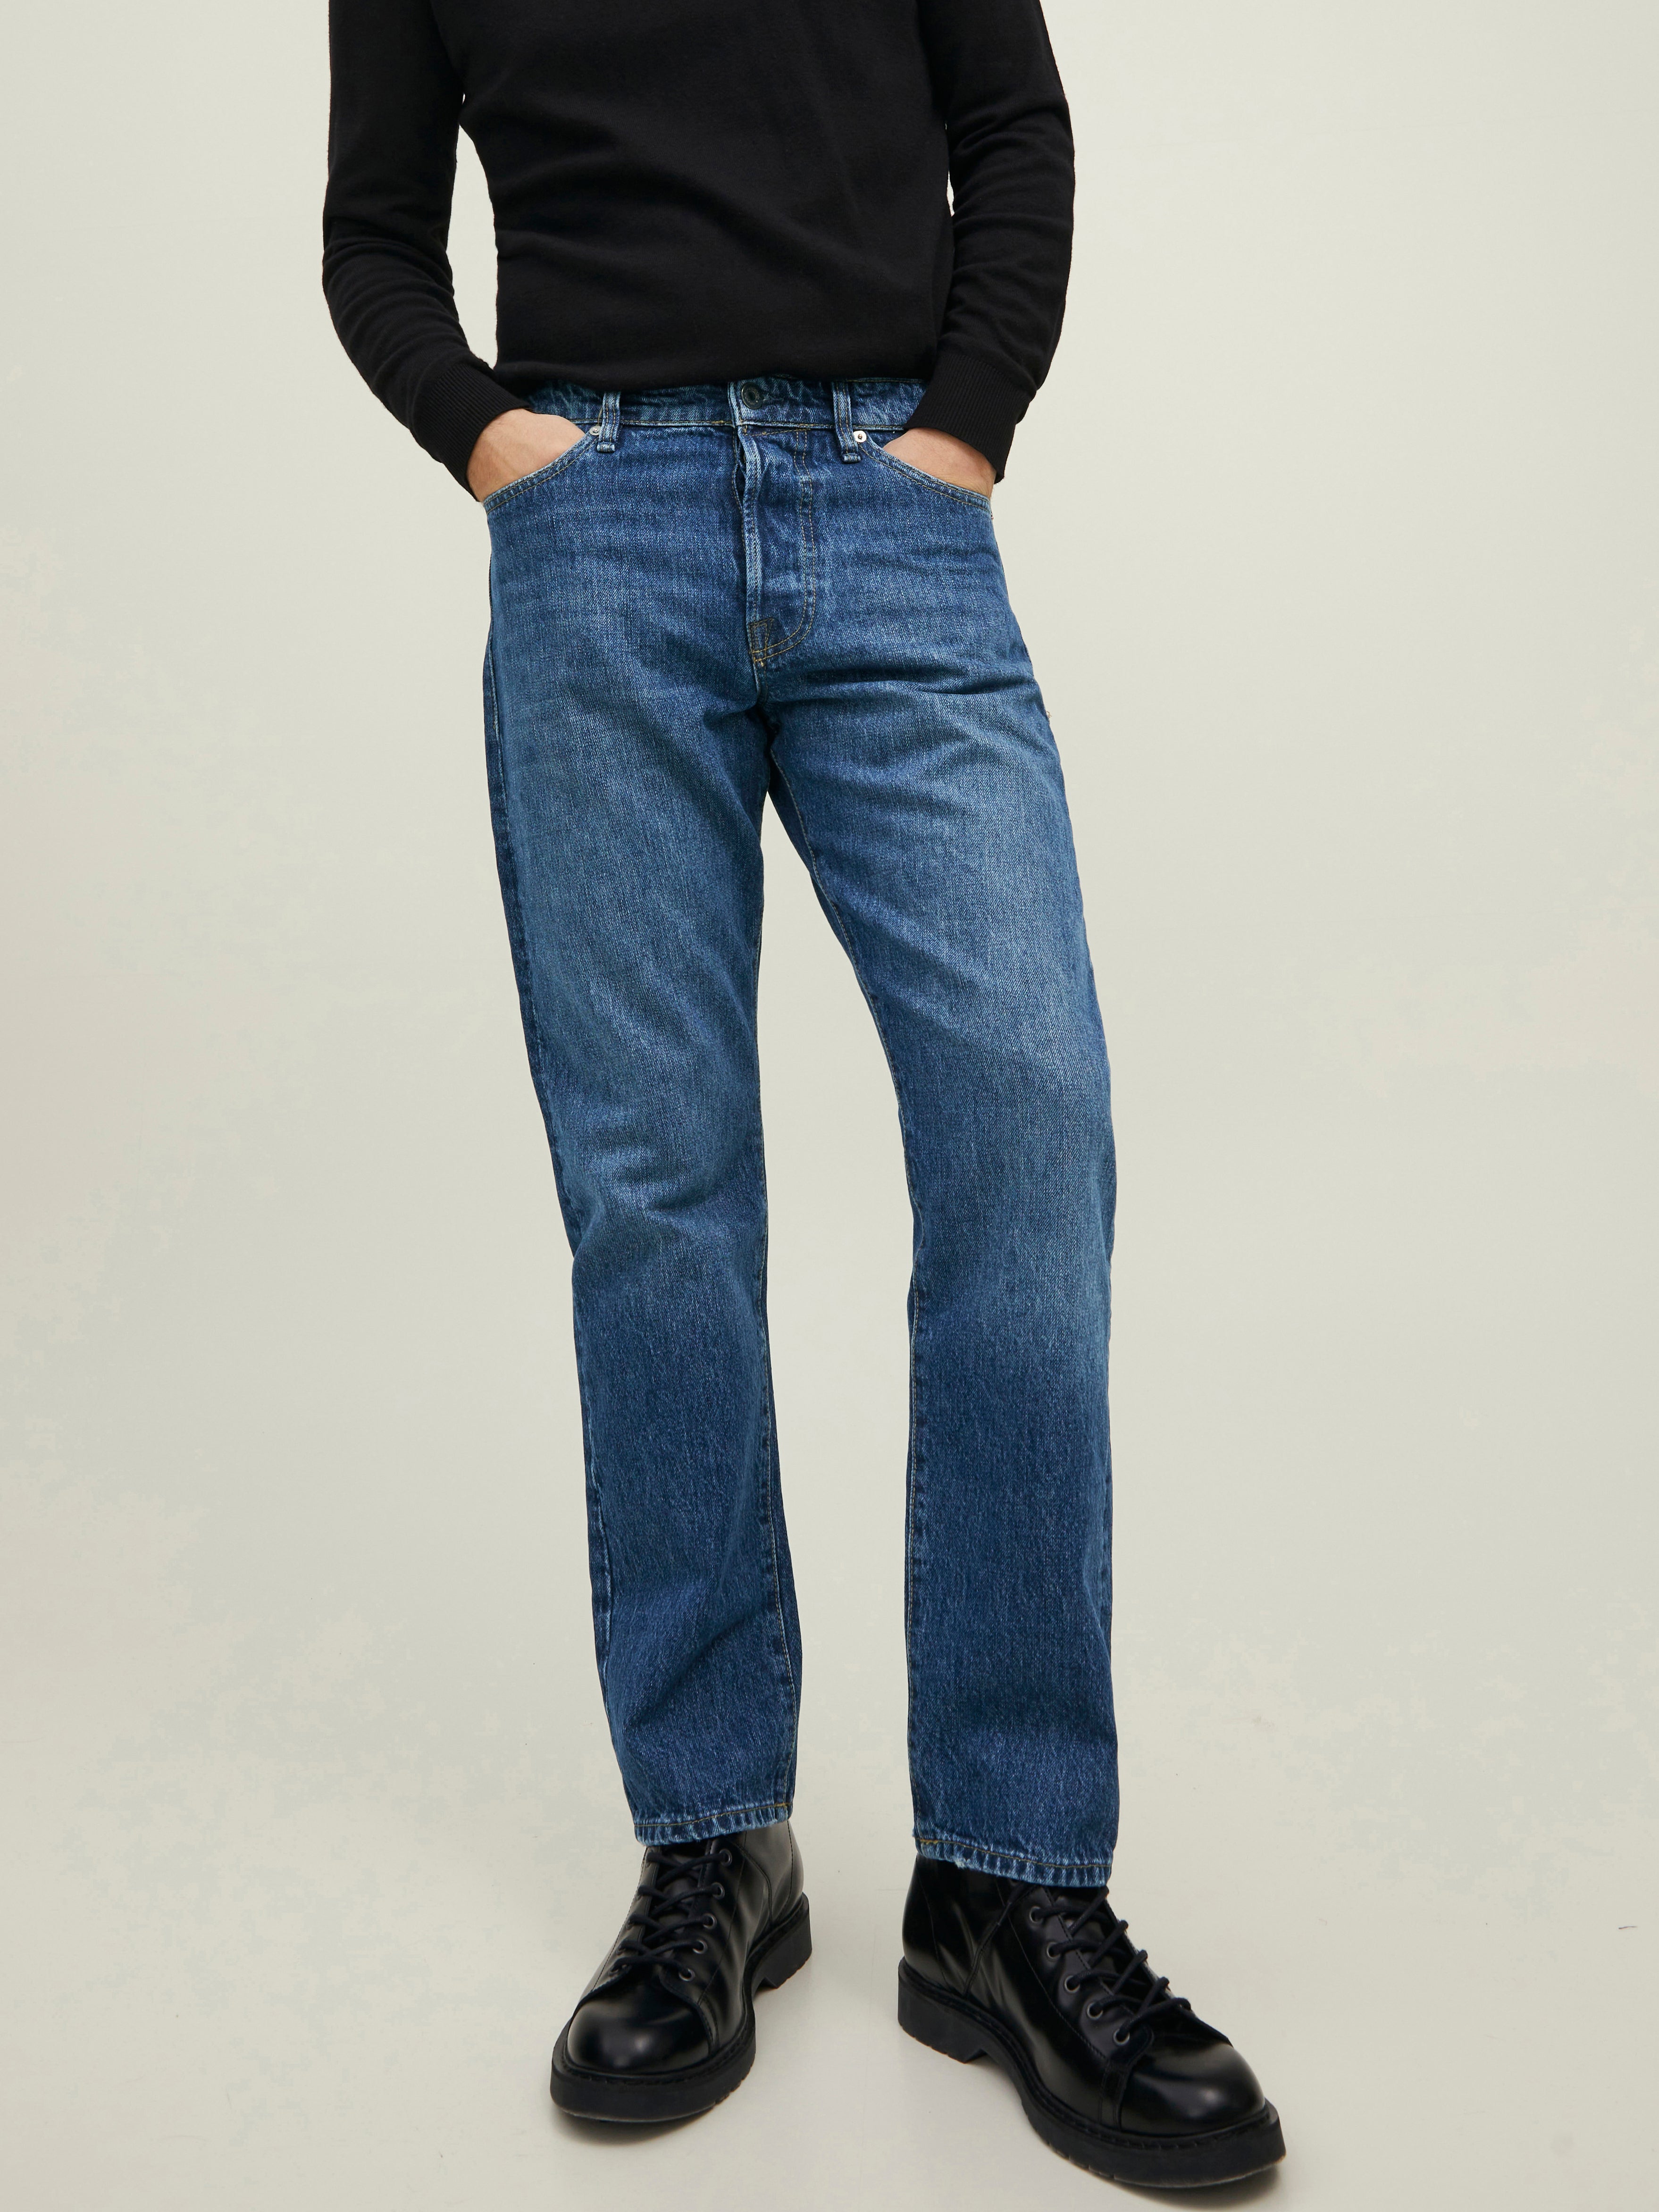 JJICHRIS JJCOOPER JOS 790 PCW Relaxed Fit Jeans | Medium Blue 